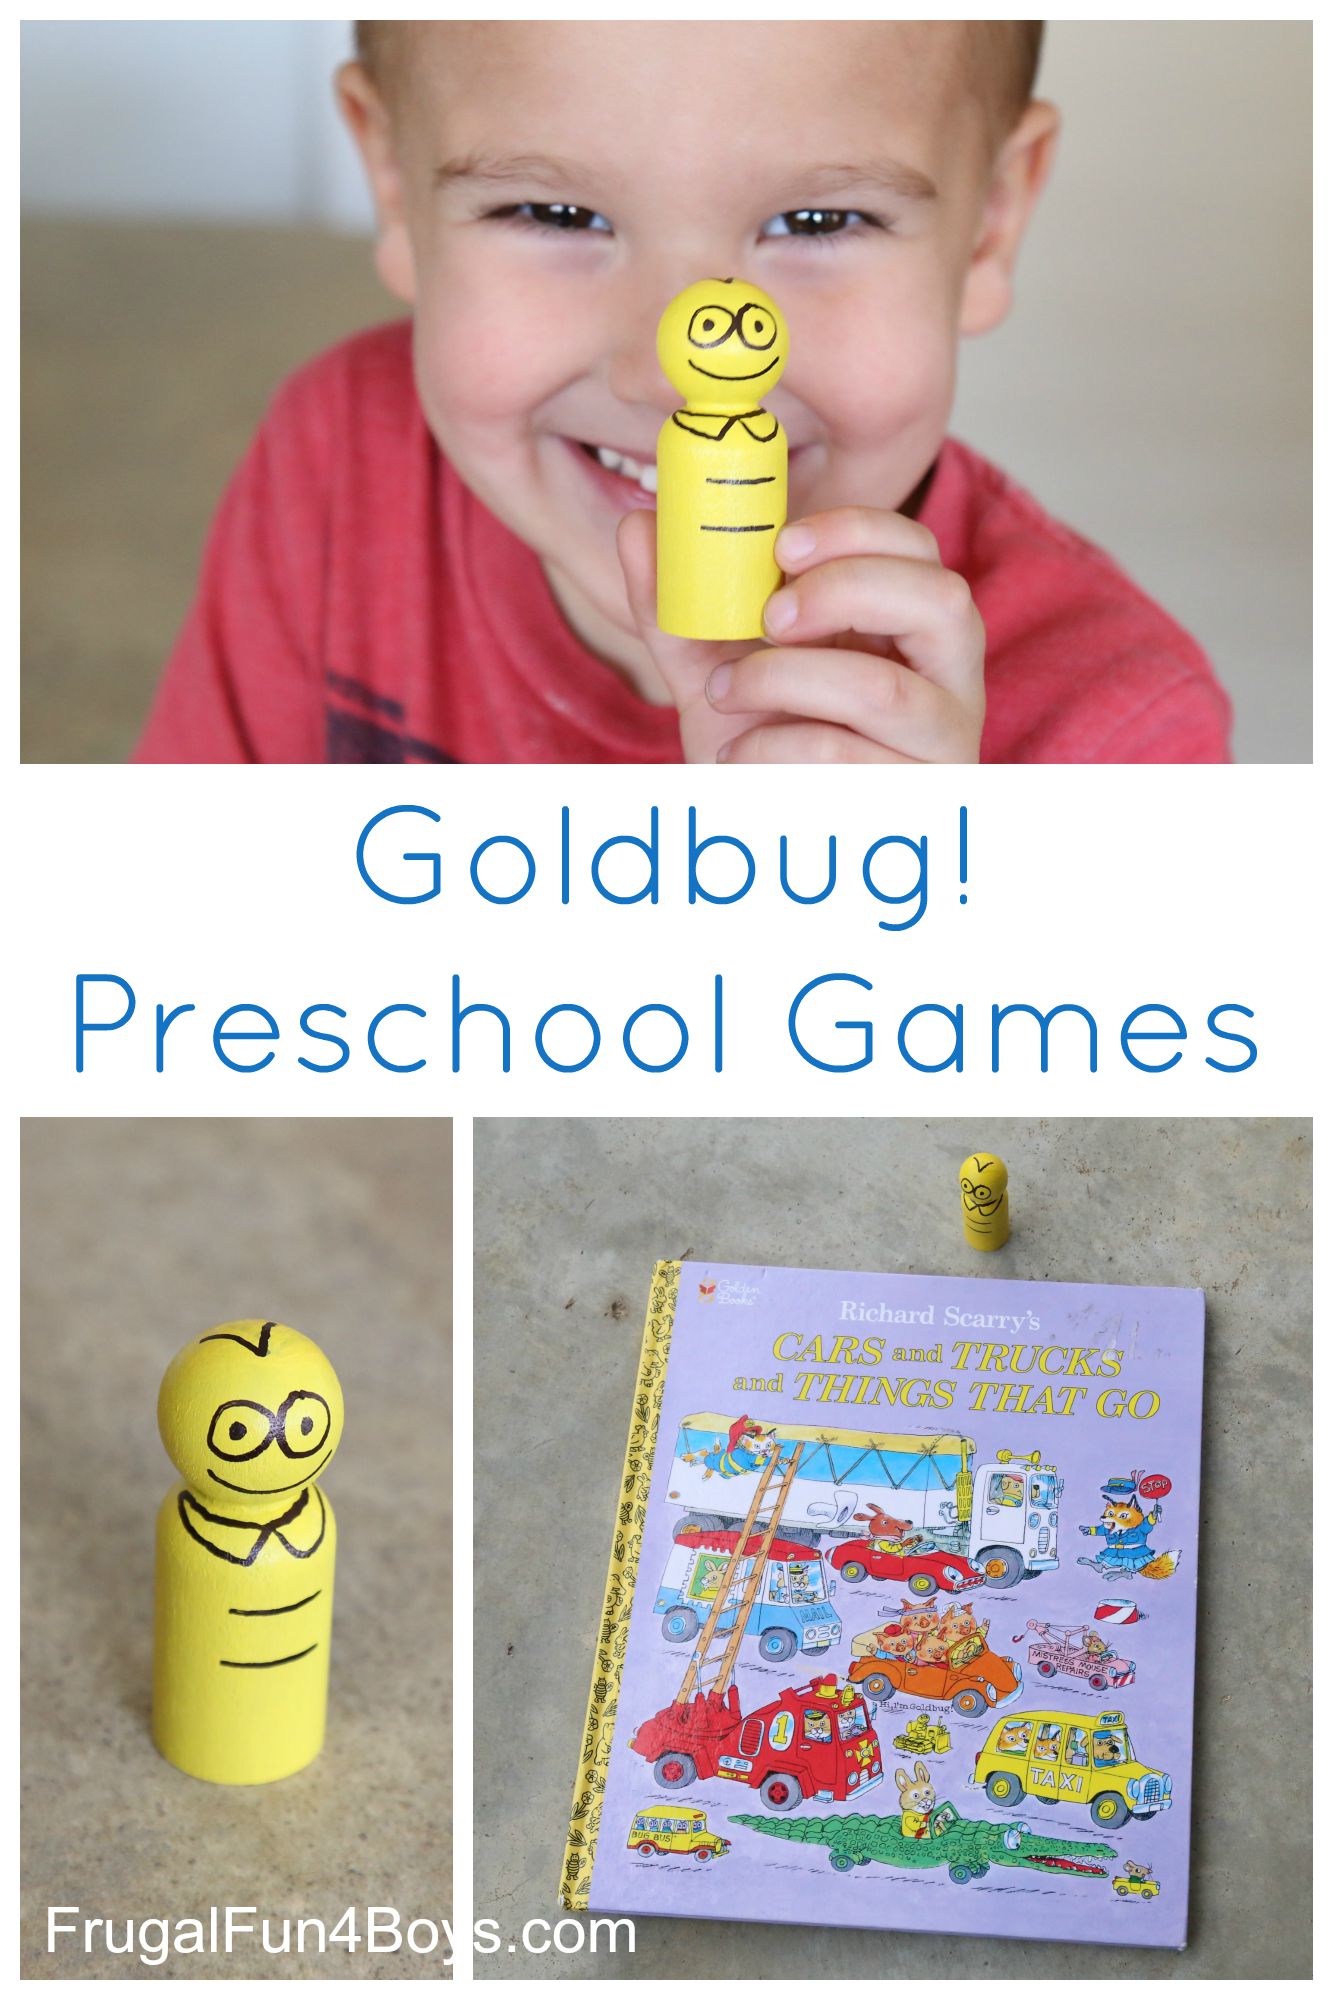 Goldbug Preschool Games